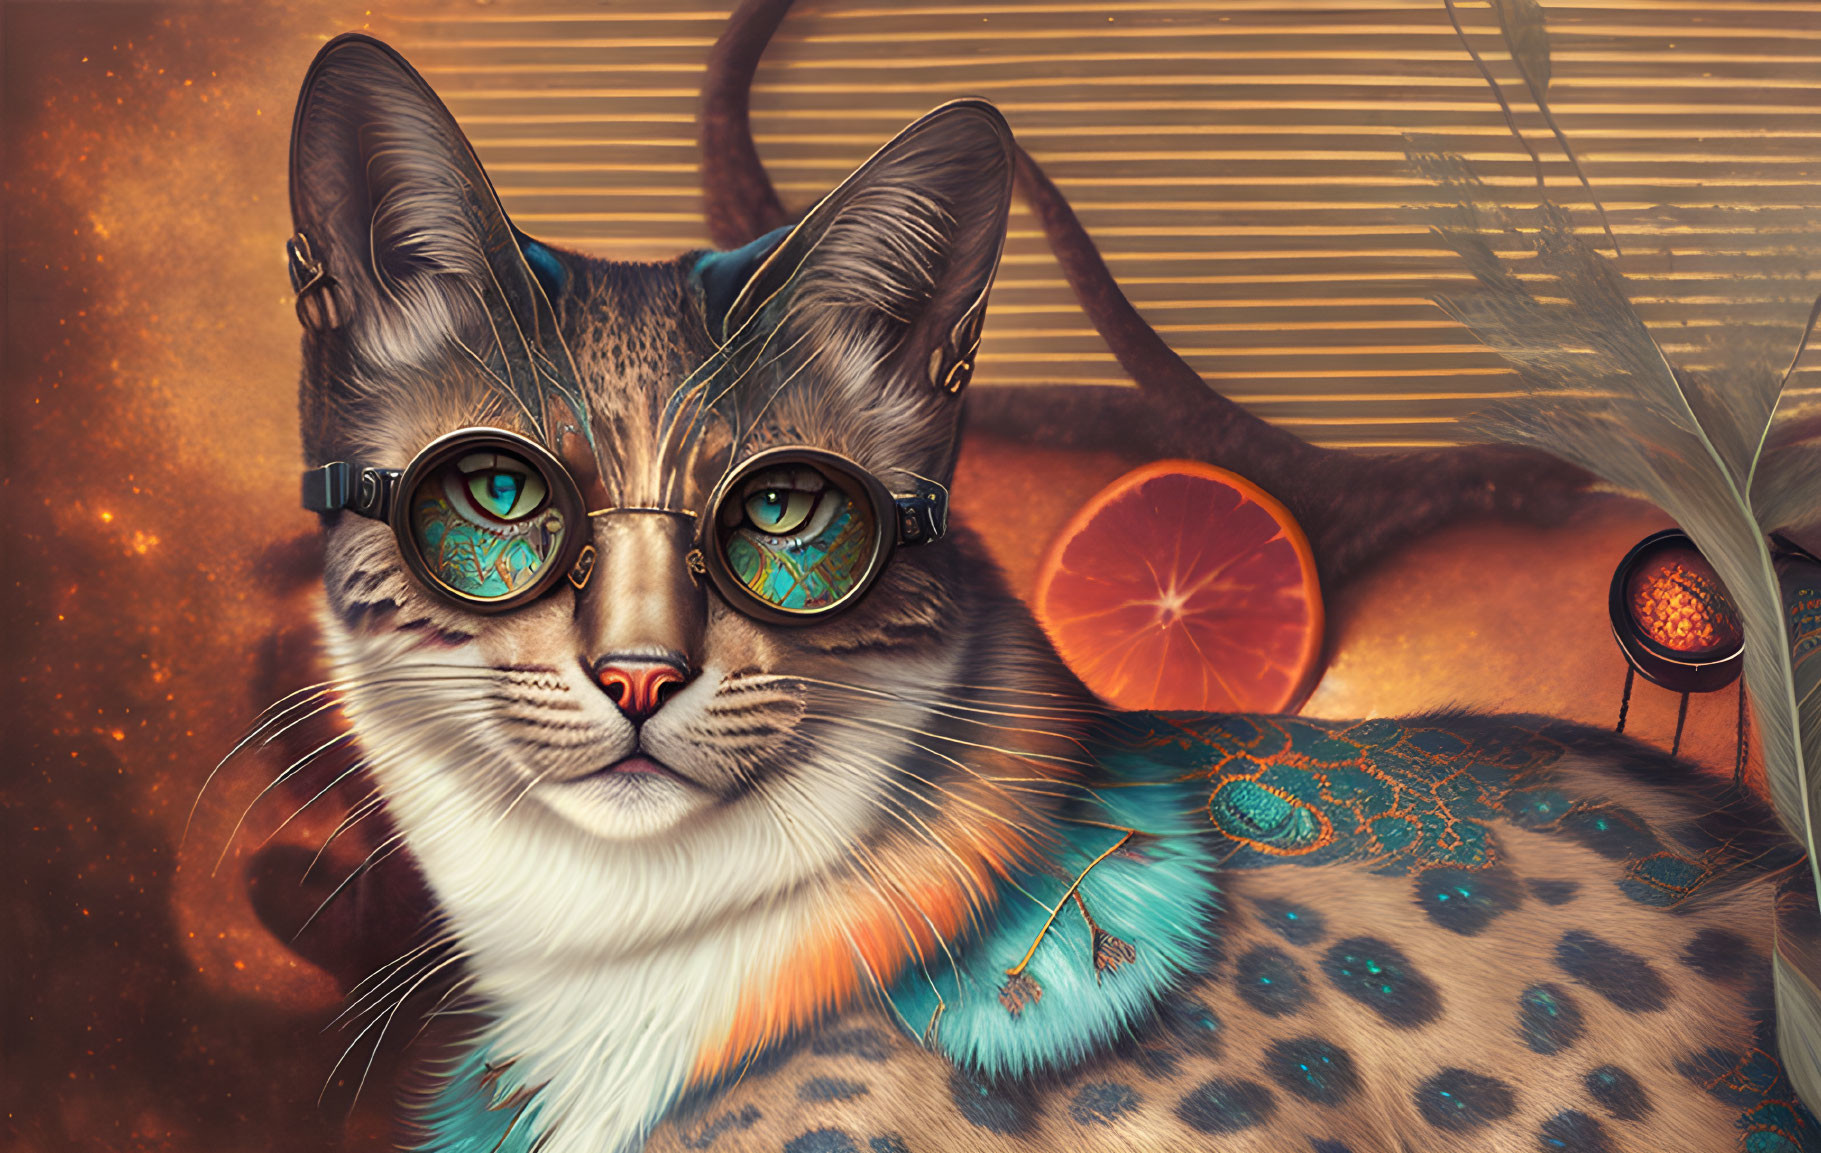 Steampunk-inspired cat digital artwork with mechanical details on orange backdrop